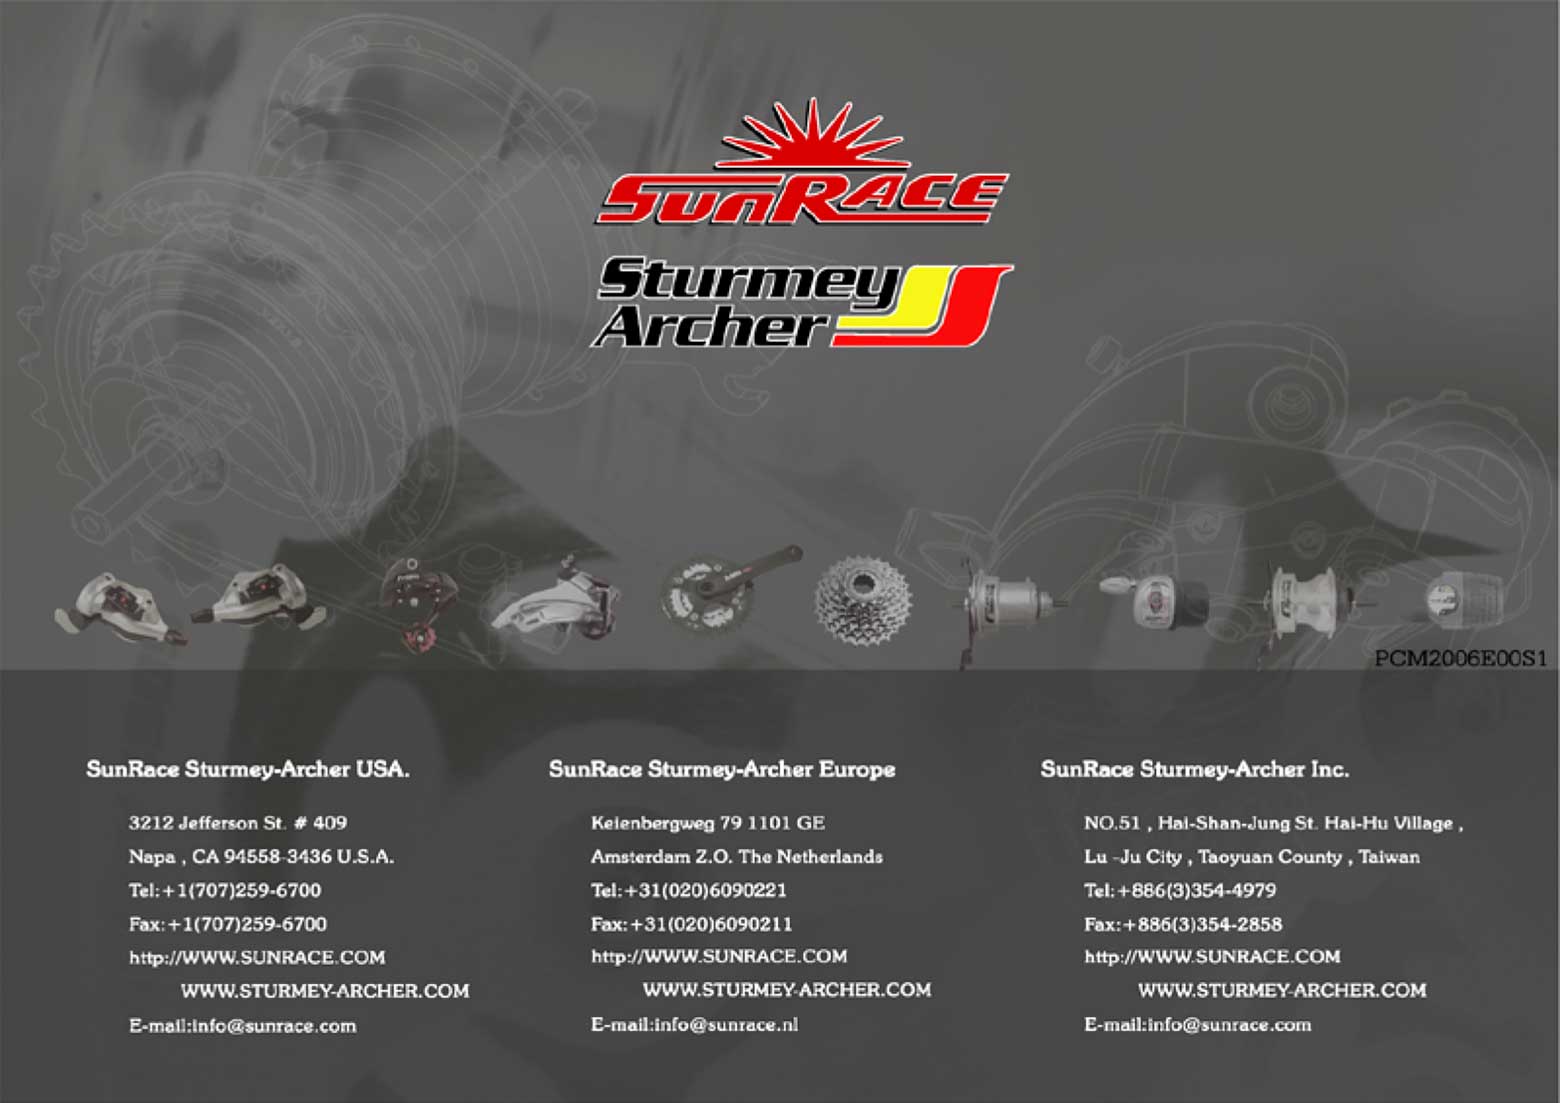 SunRace Product Catalogue 2006-2007 rear cover main image